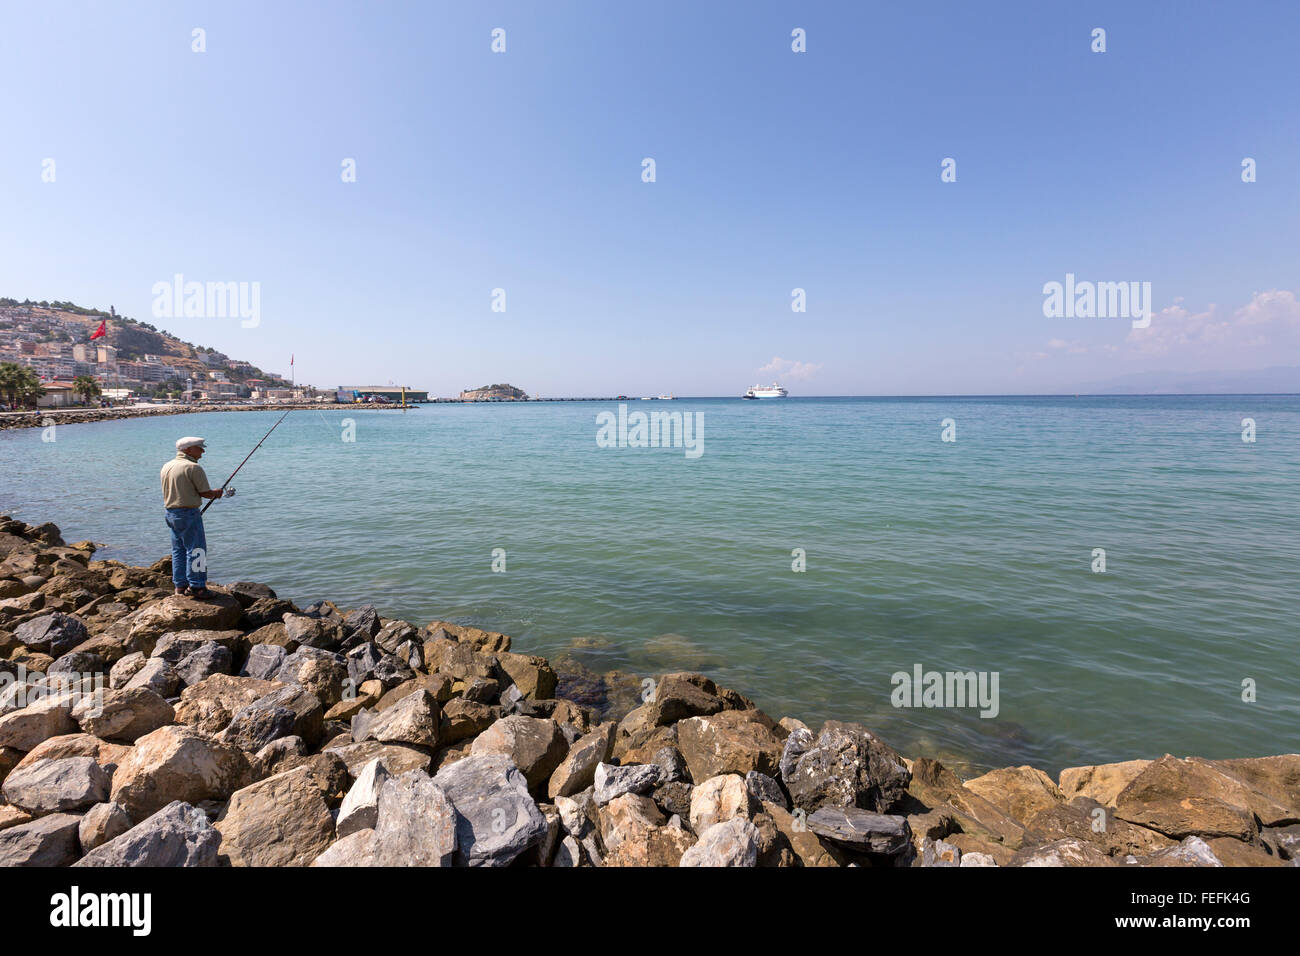 Man fishing in the Aegean sea in the Promenade in Atatürk Boulevard looking the in Kuşadası,  Turkey Stock Photo